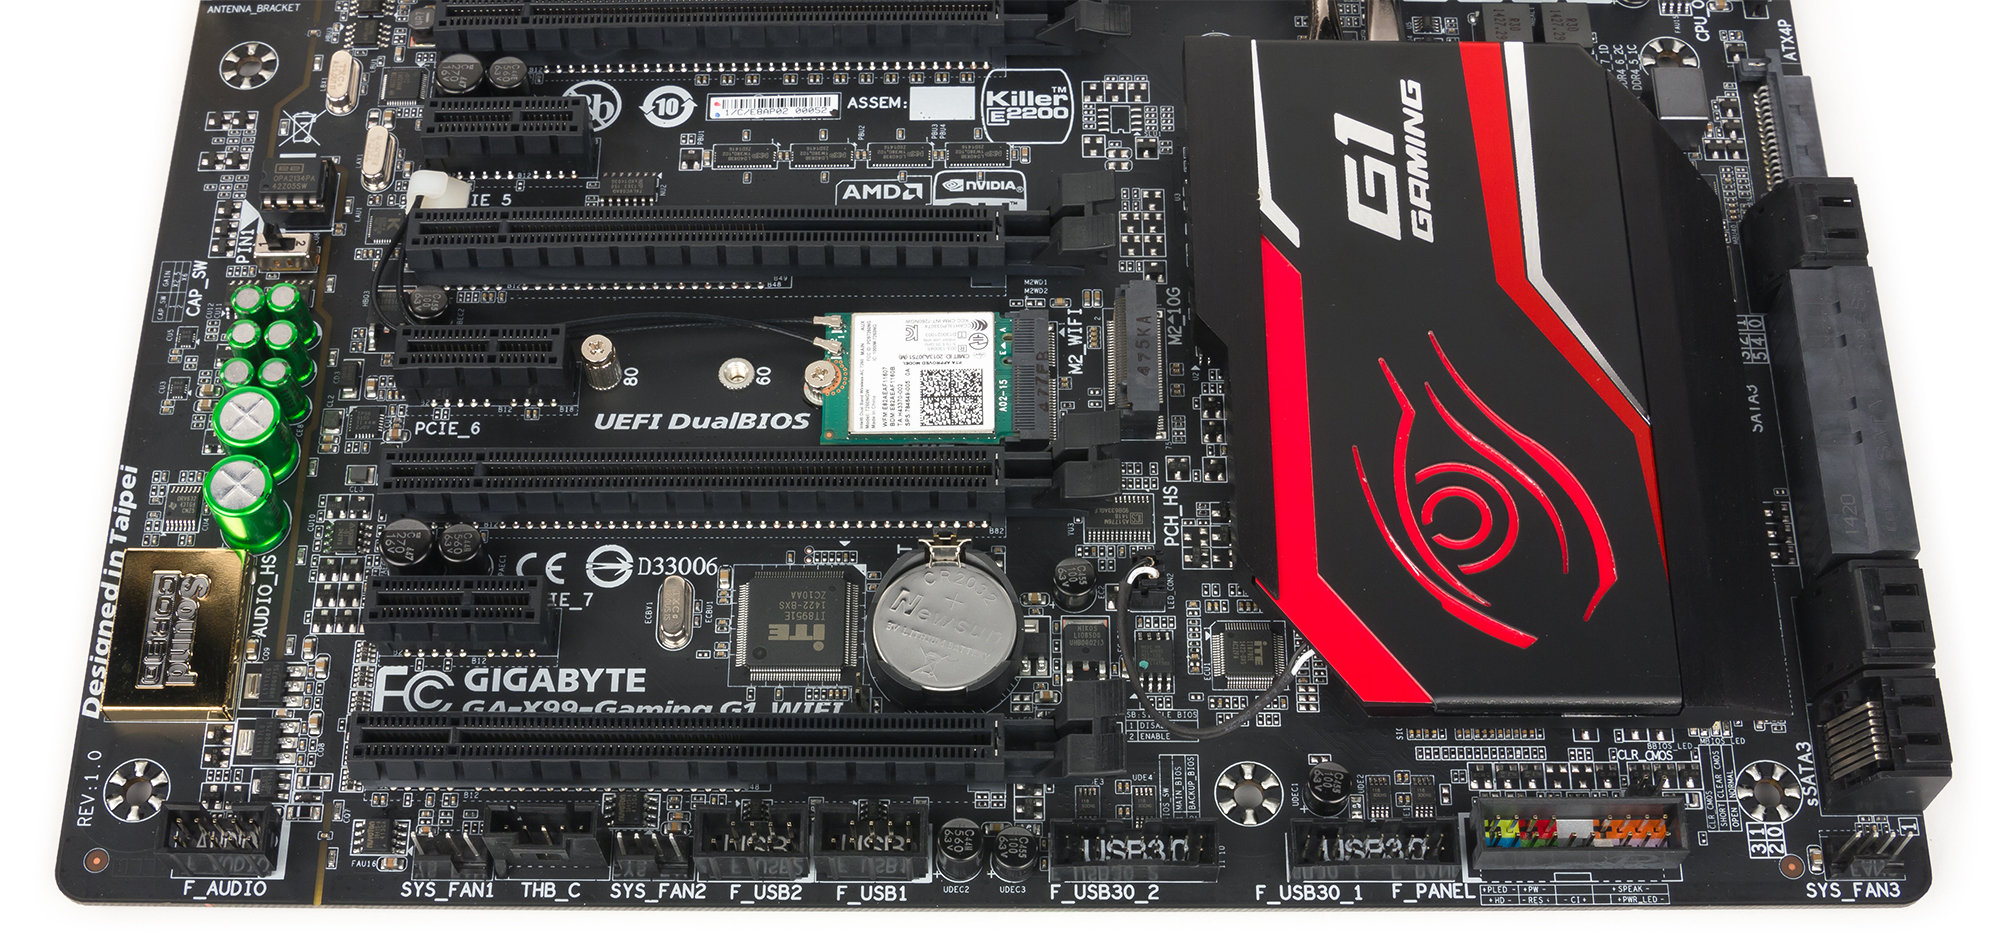 X99 reg. Gigabyte ga-x99-Gaming g1 WIFI. PCI Express 2.0 DUALBIOS. Gigabyte x99 g1 Gaming WIFI. Gigabyte 990x.